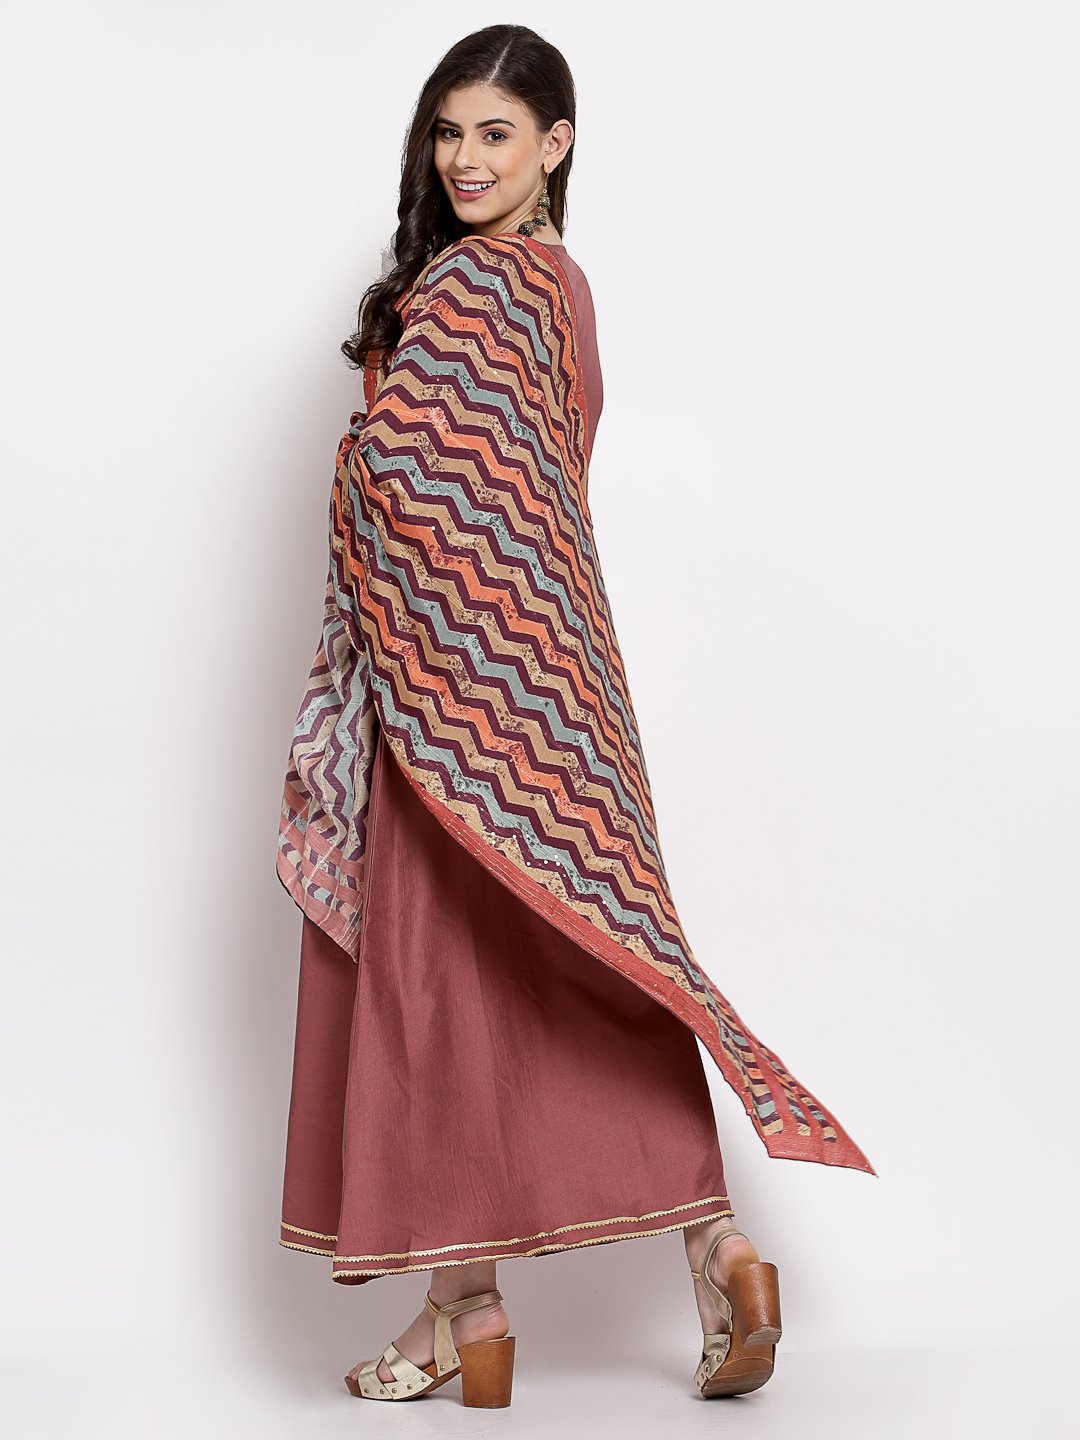 Women's Dark Pink Cotton Solid 3/4 Sleeve V Neck Casual Anarkali Gown - Myshka